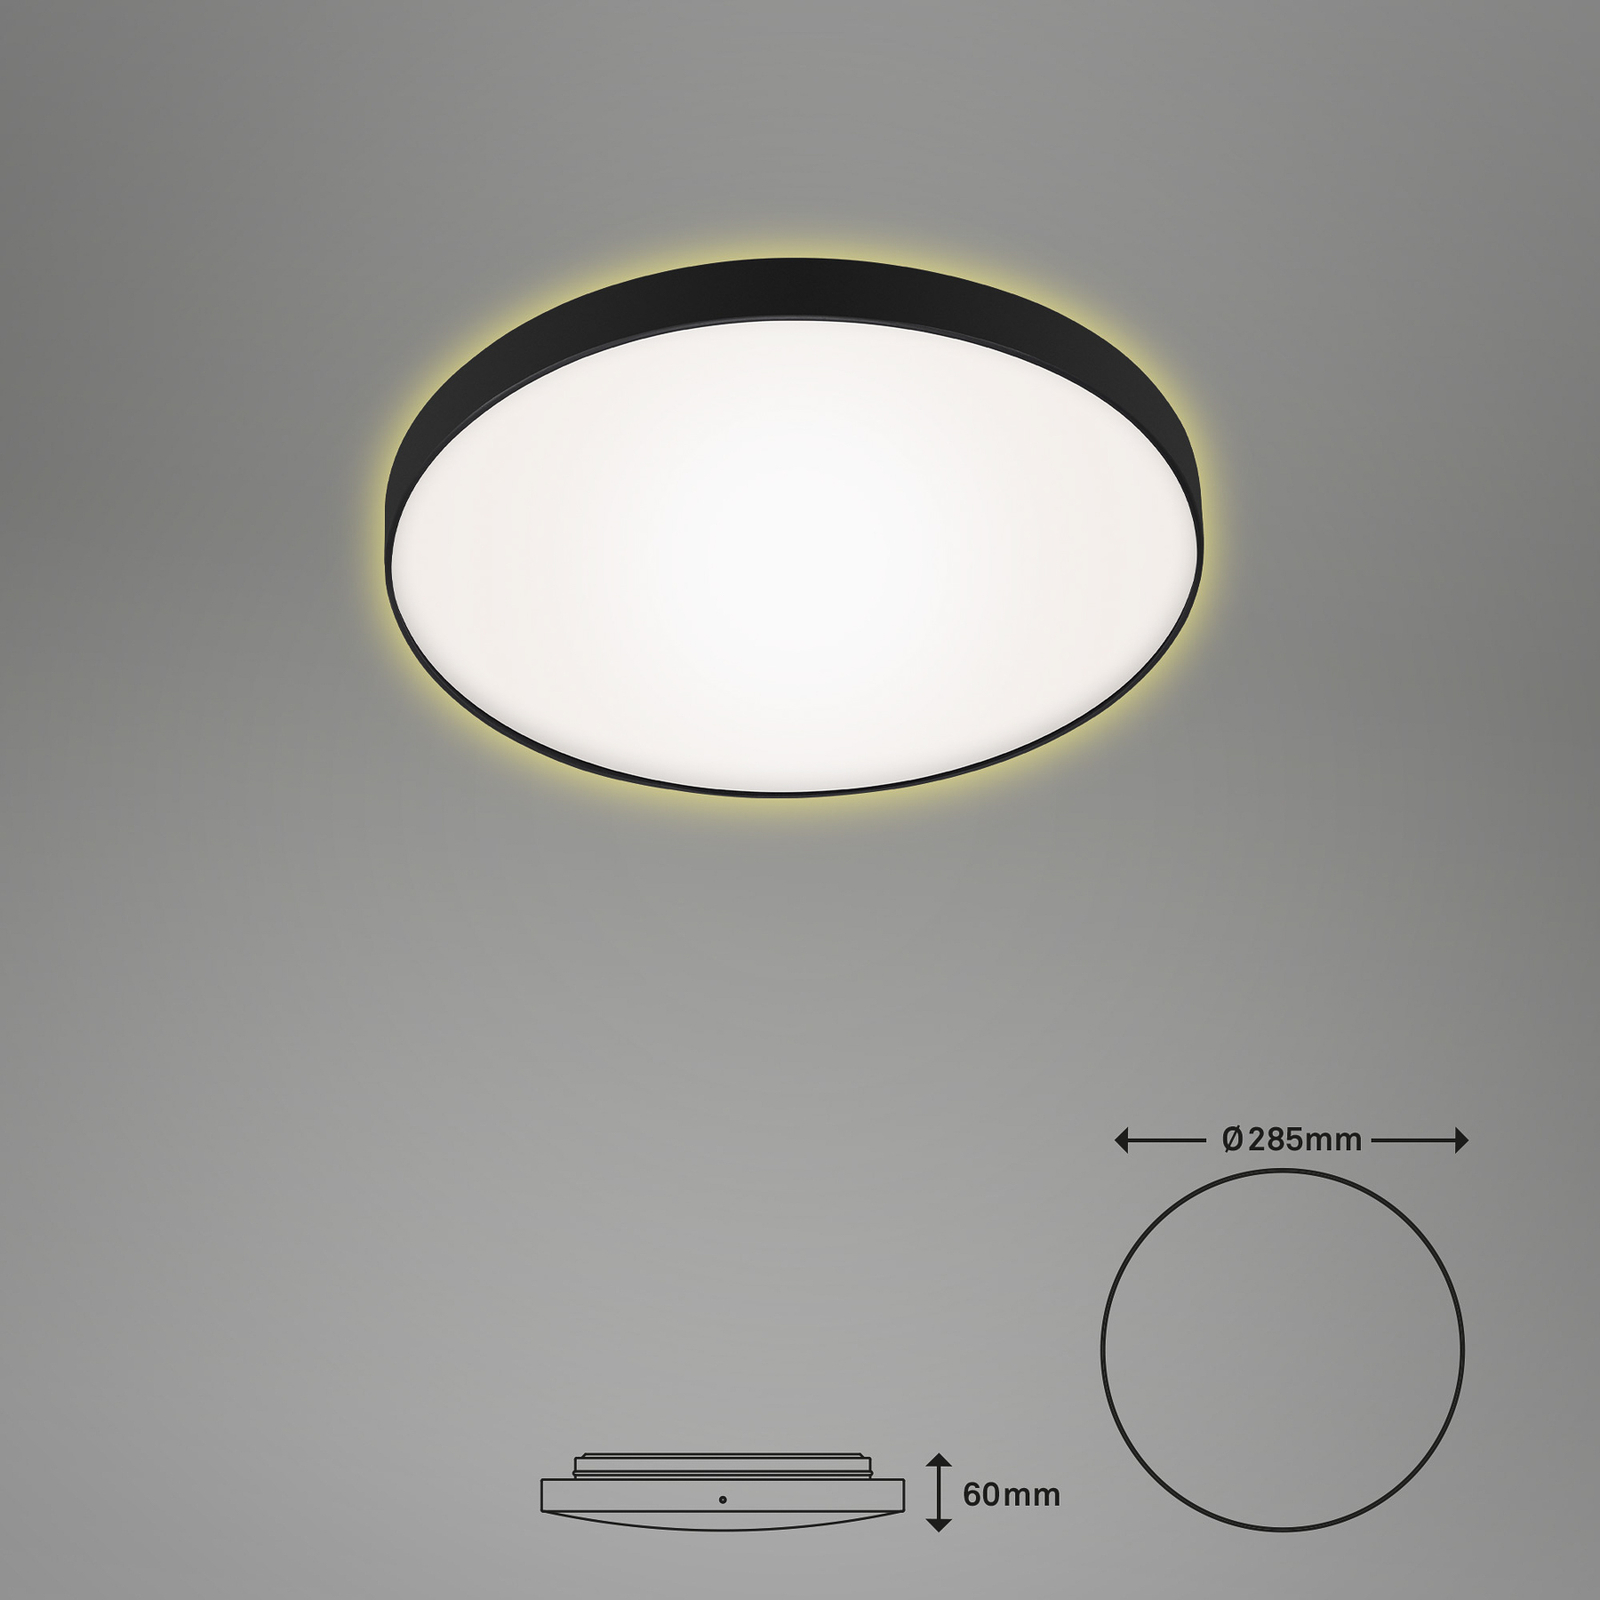 LED ceiling light Flet with Backlight, Ø 28.5 cm